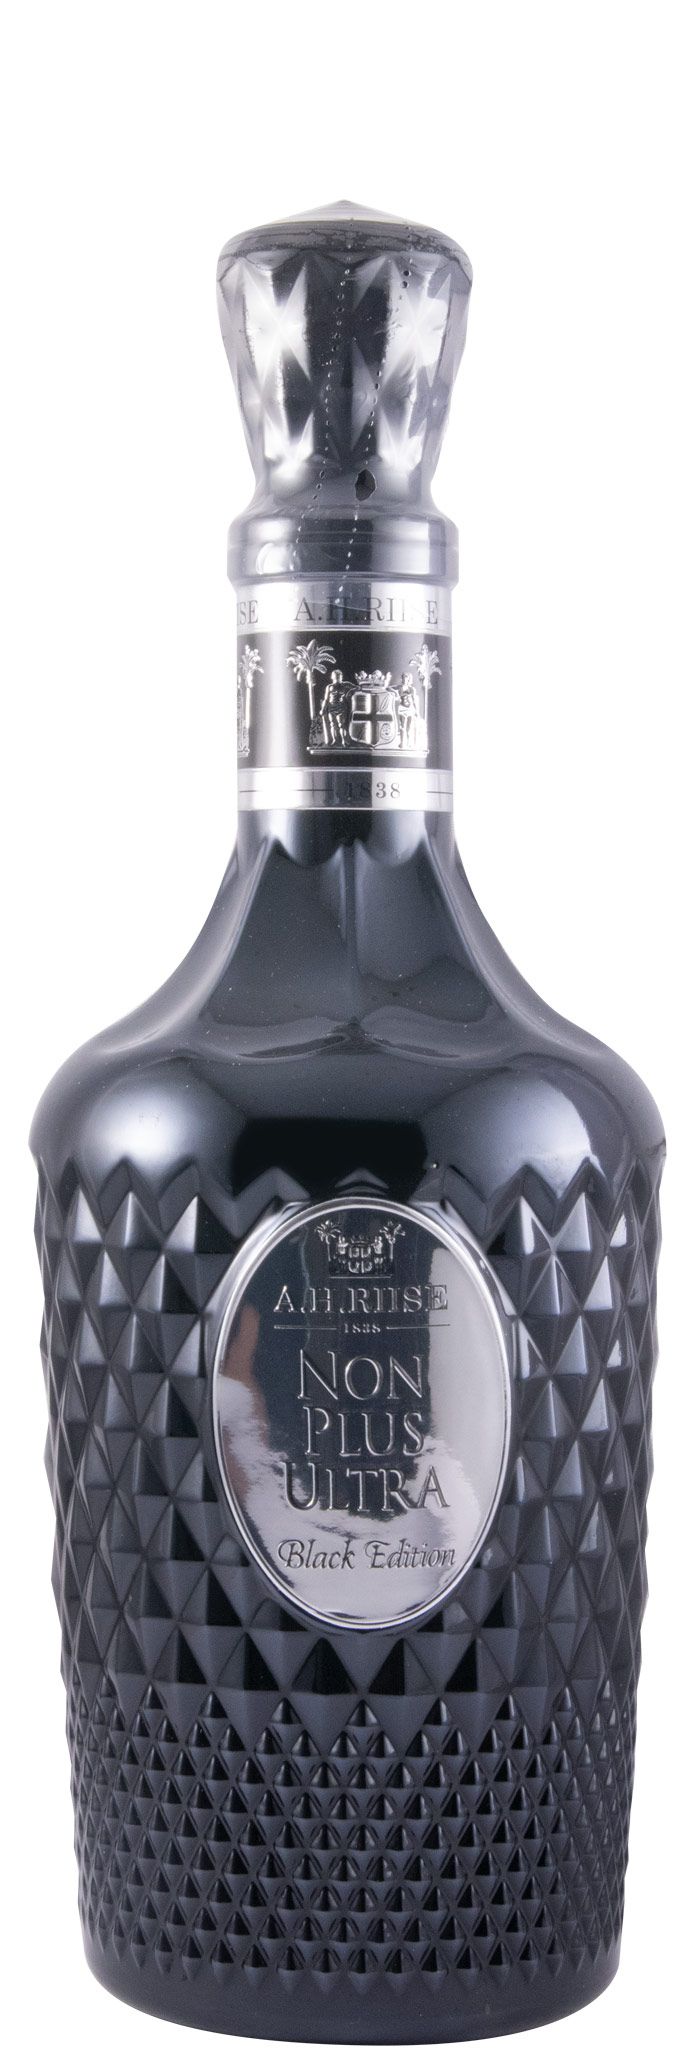 Rum AH Riise Non Plus Ultra Black Edition